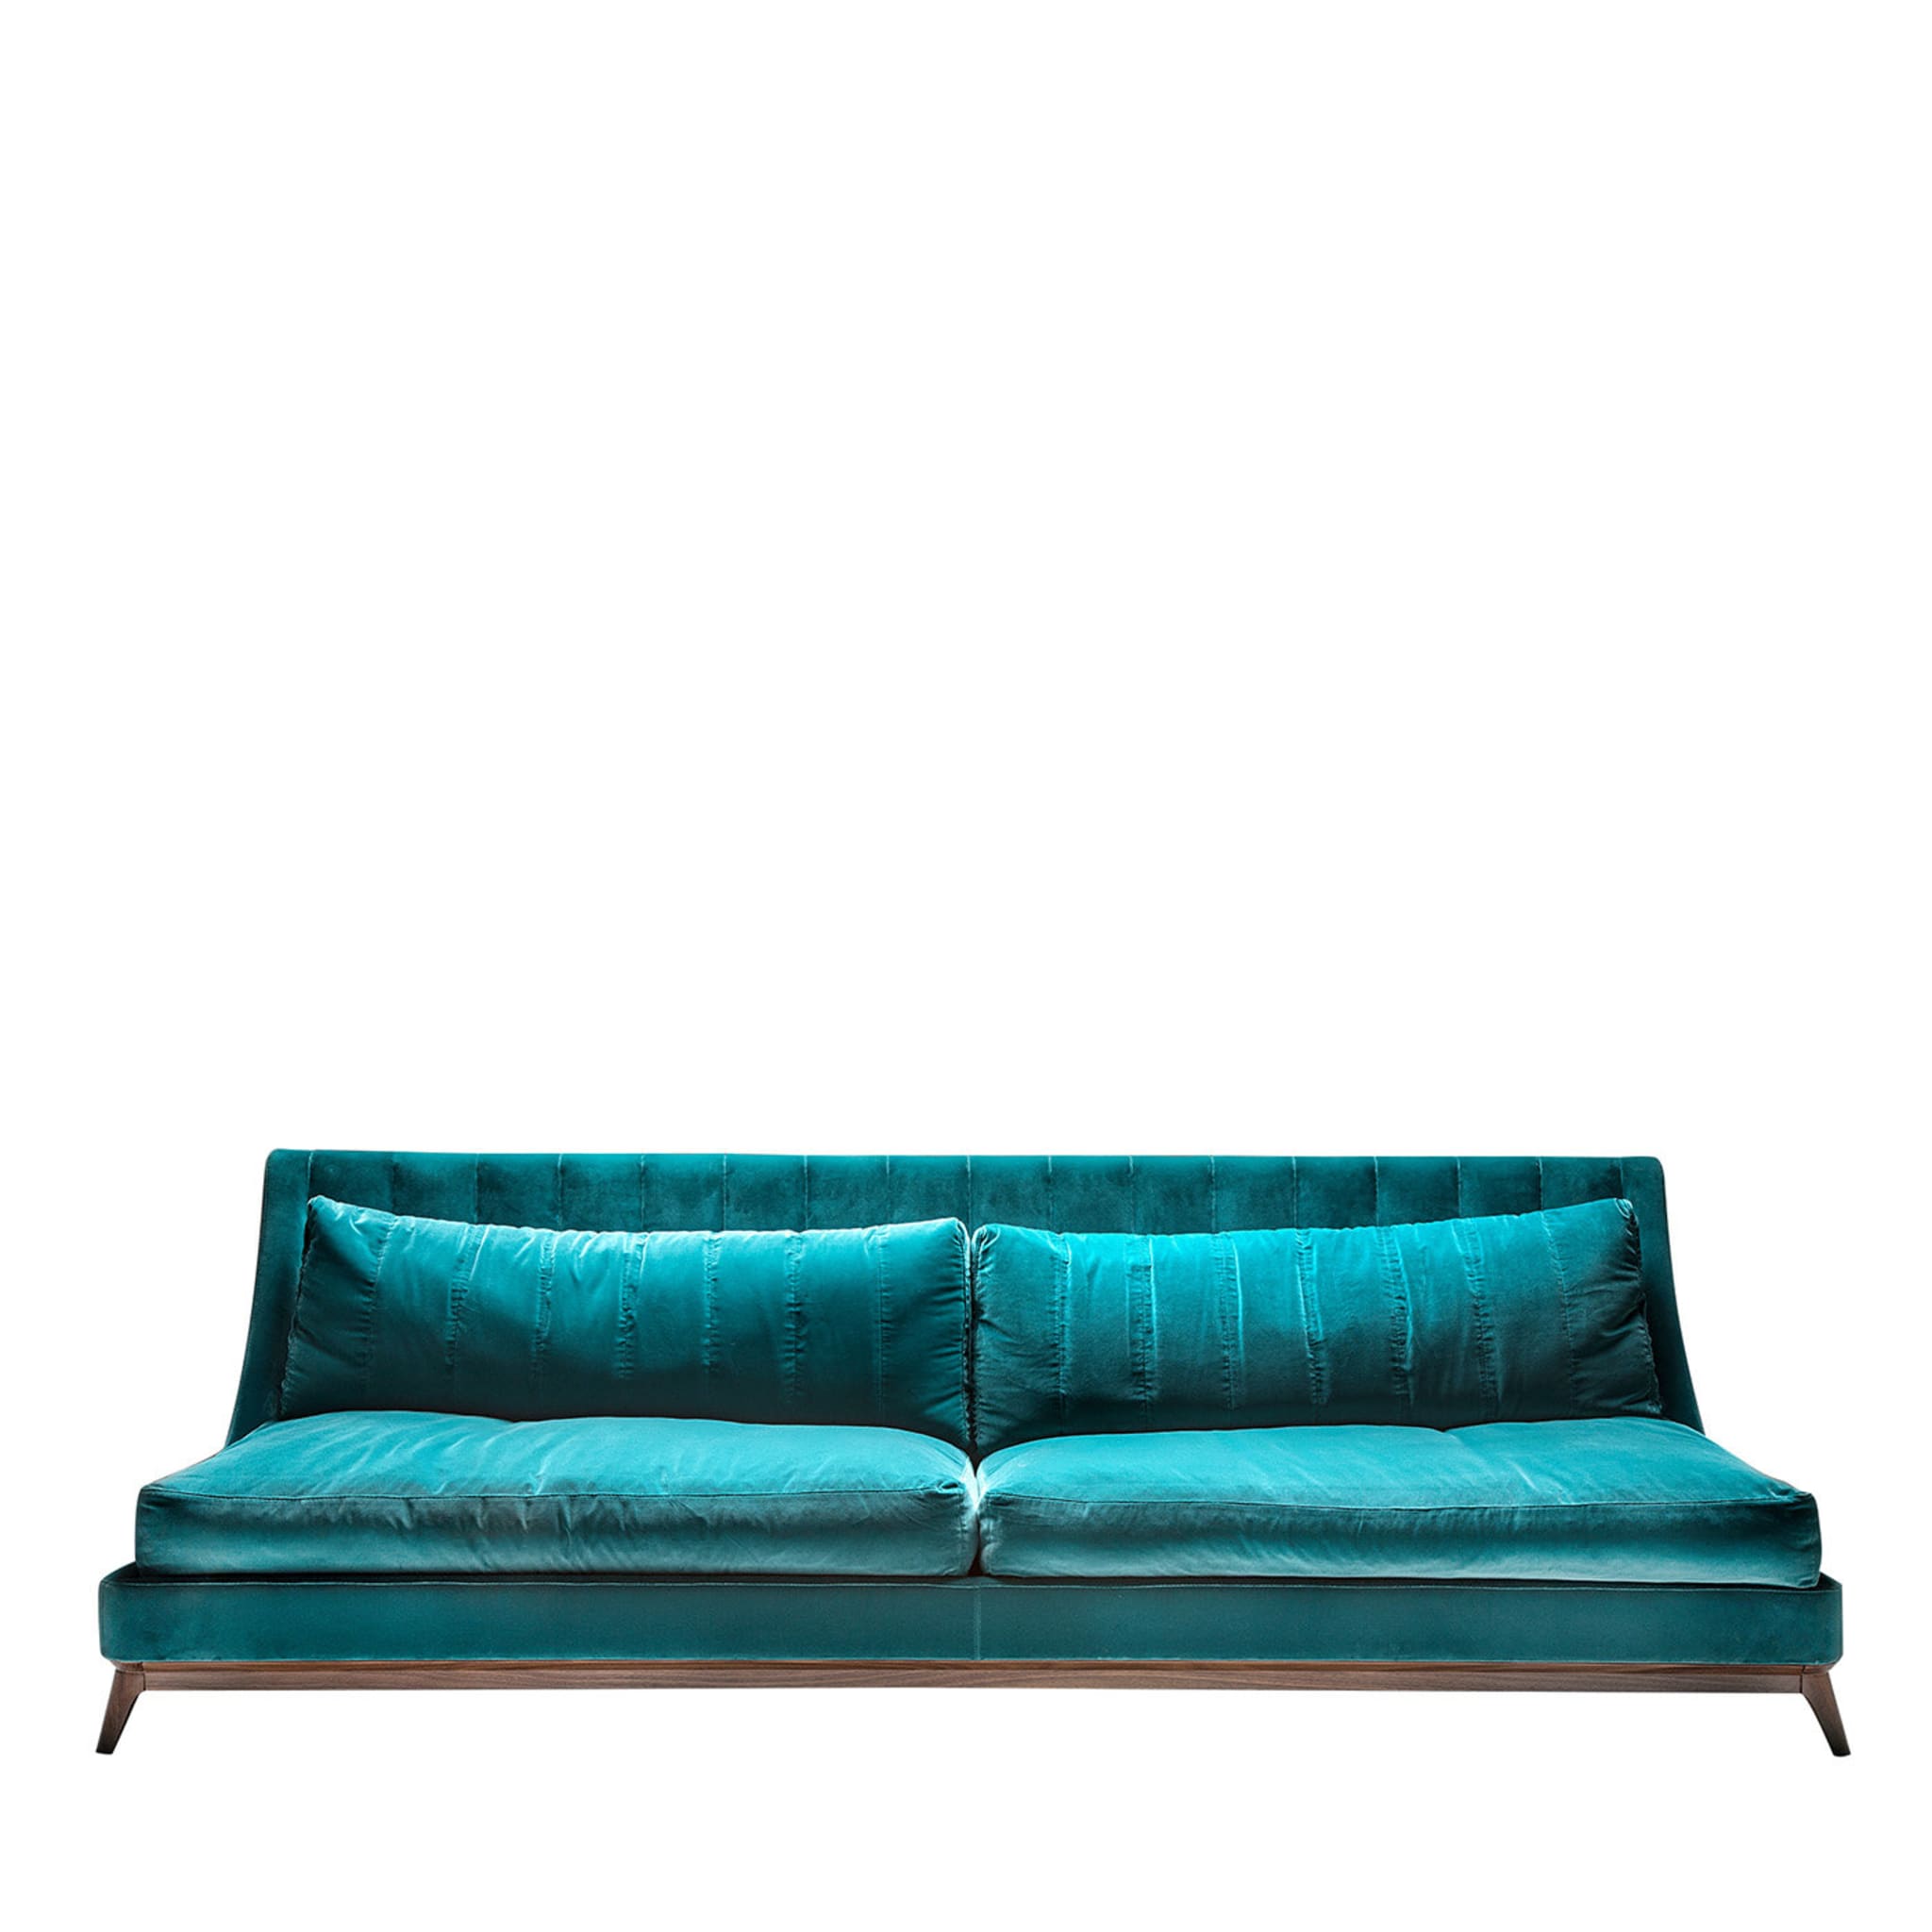 Galatea 3-sitzer sofa by Giovanna Azzarello - Hauptansicht